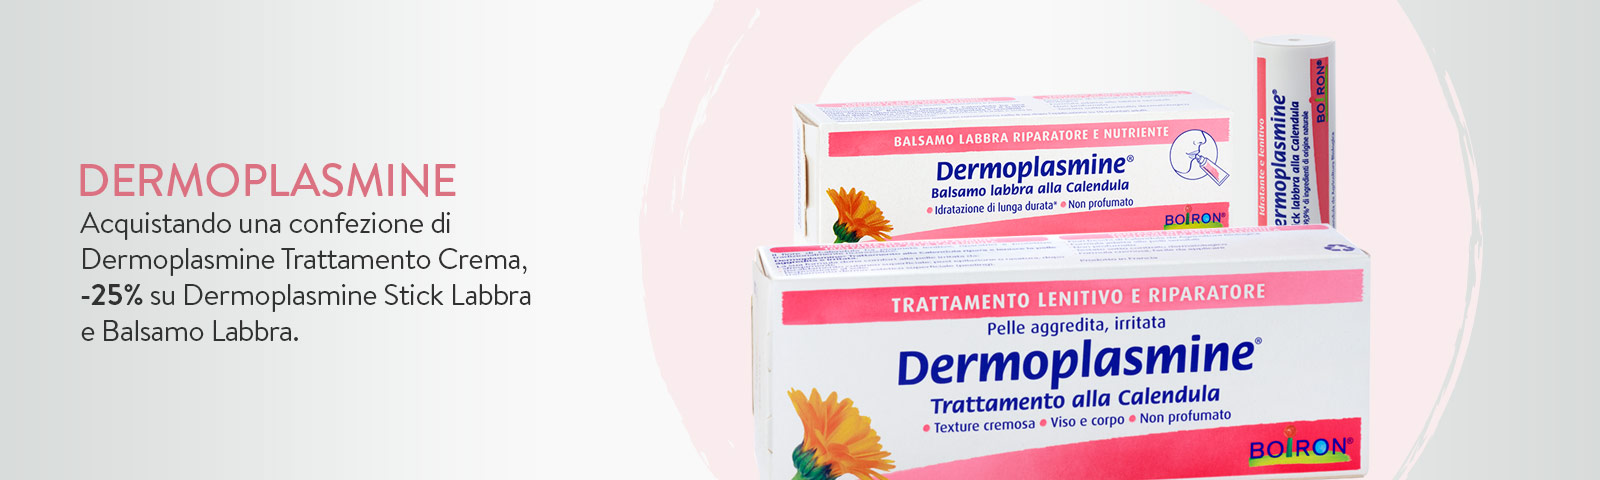 Dermoplasmine